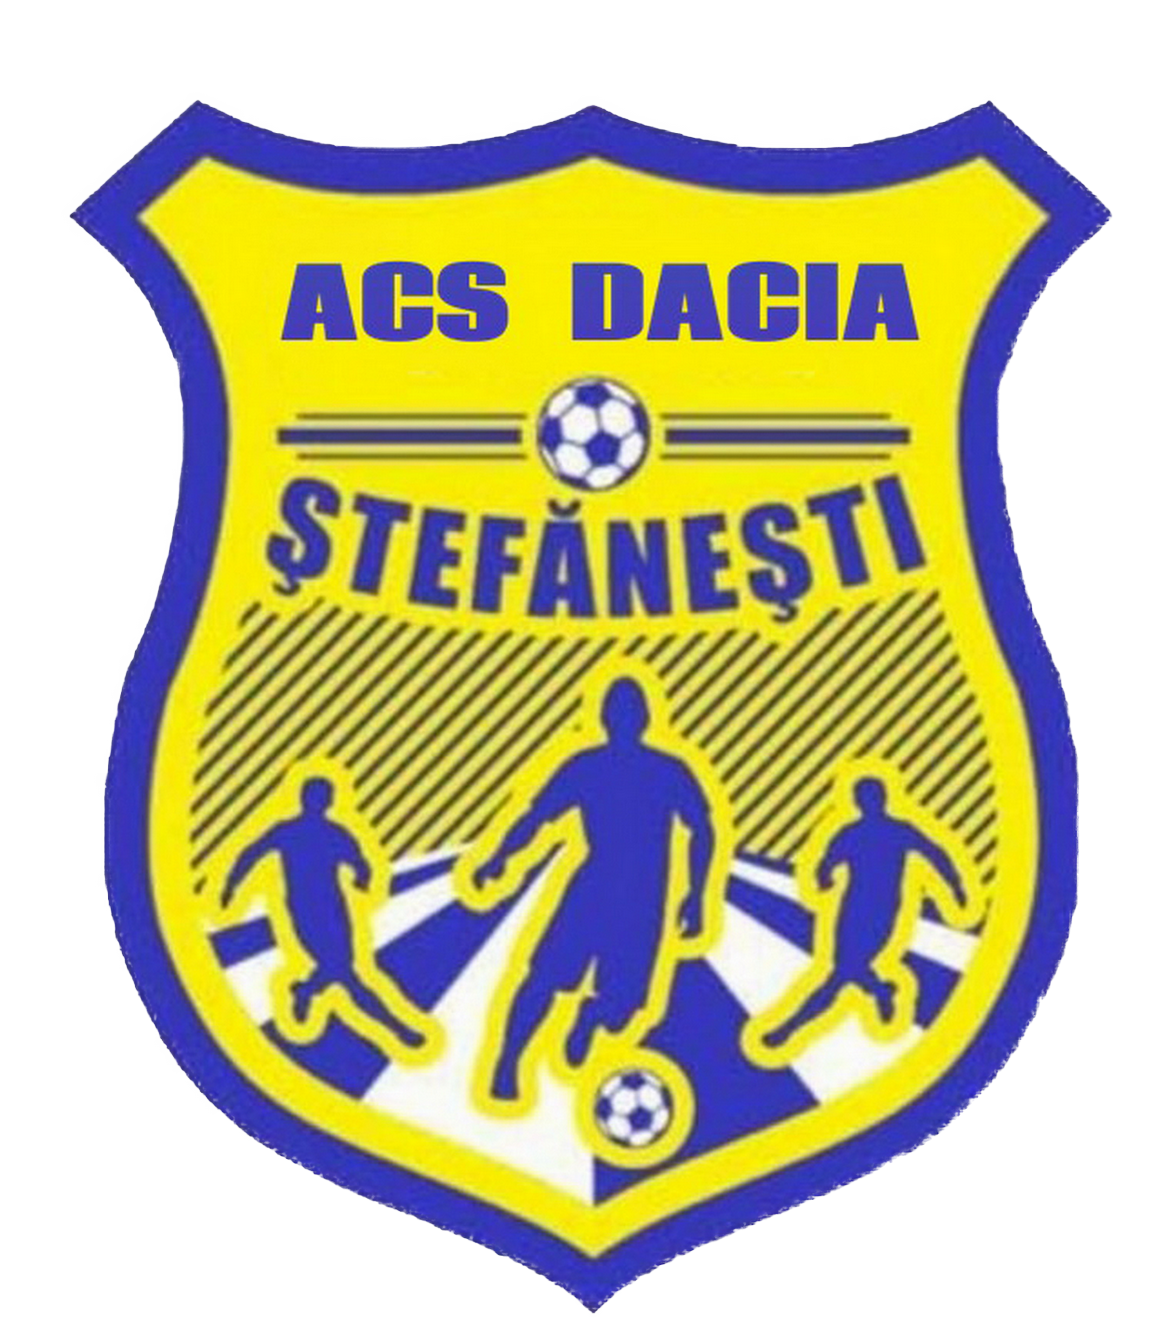 A C S Dacia Stefanesti